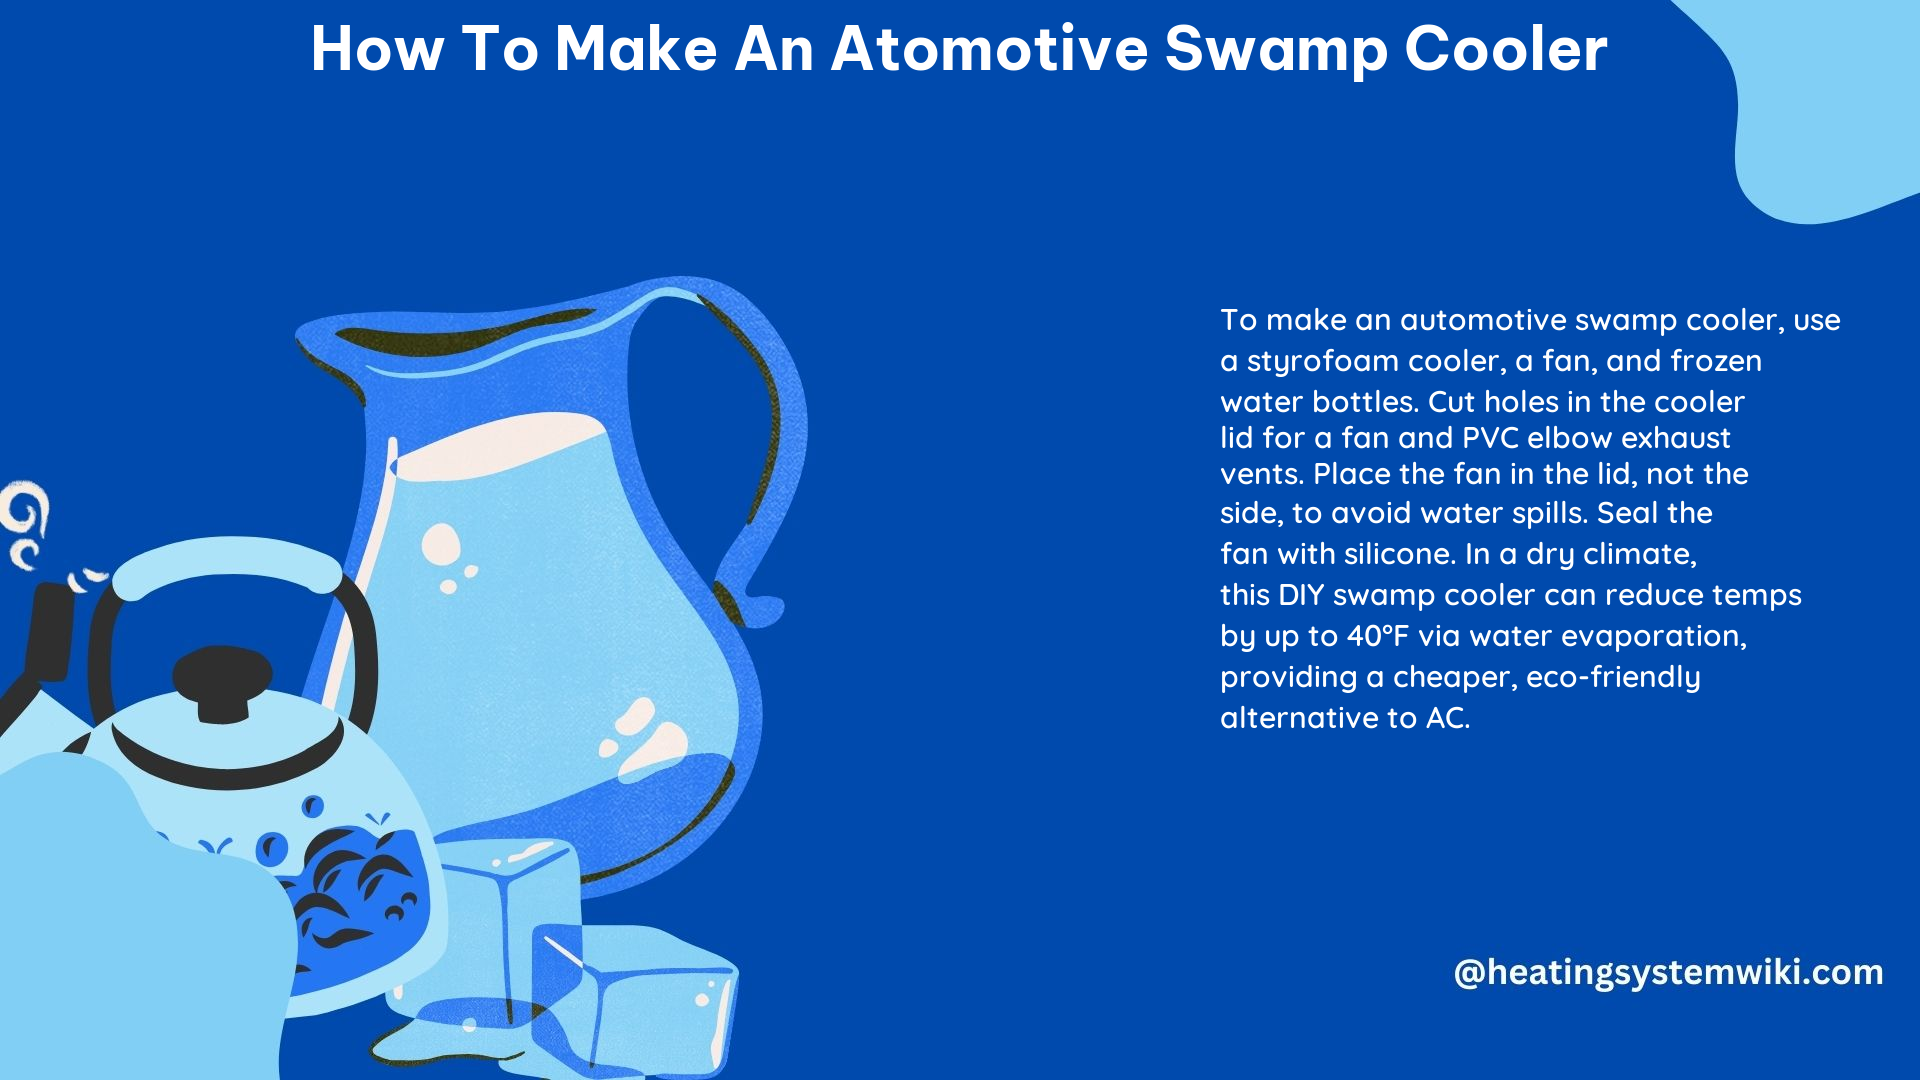 How to Make an Atomotive Swamp Cooler